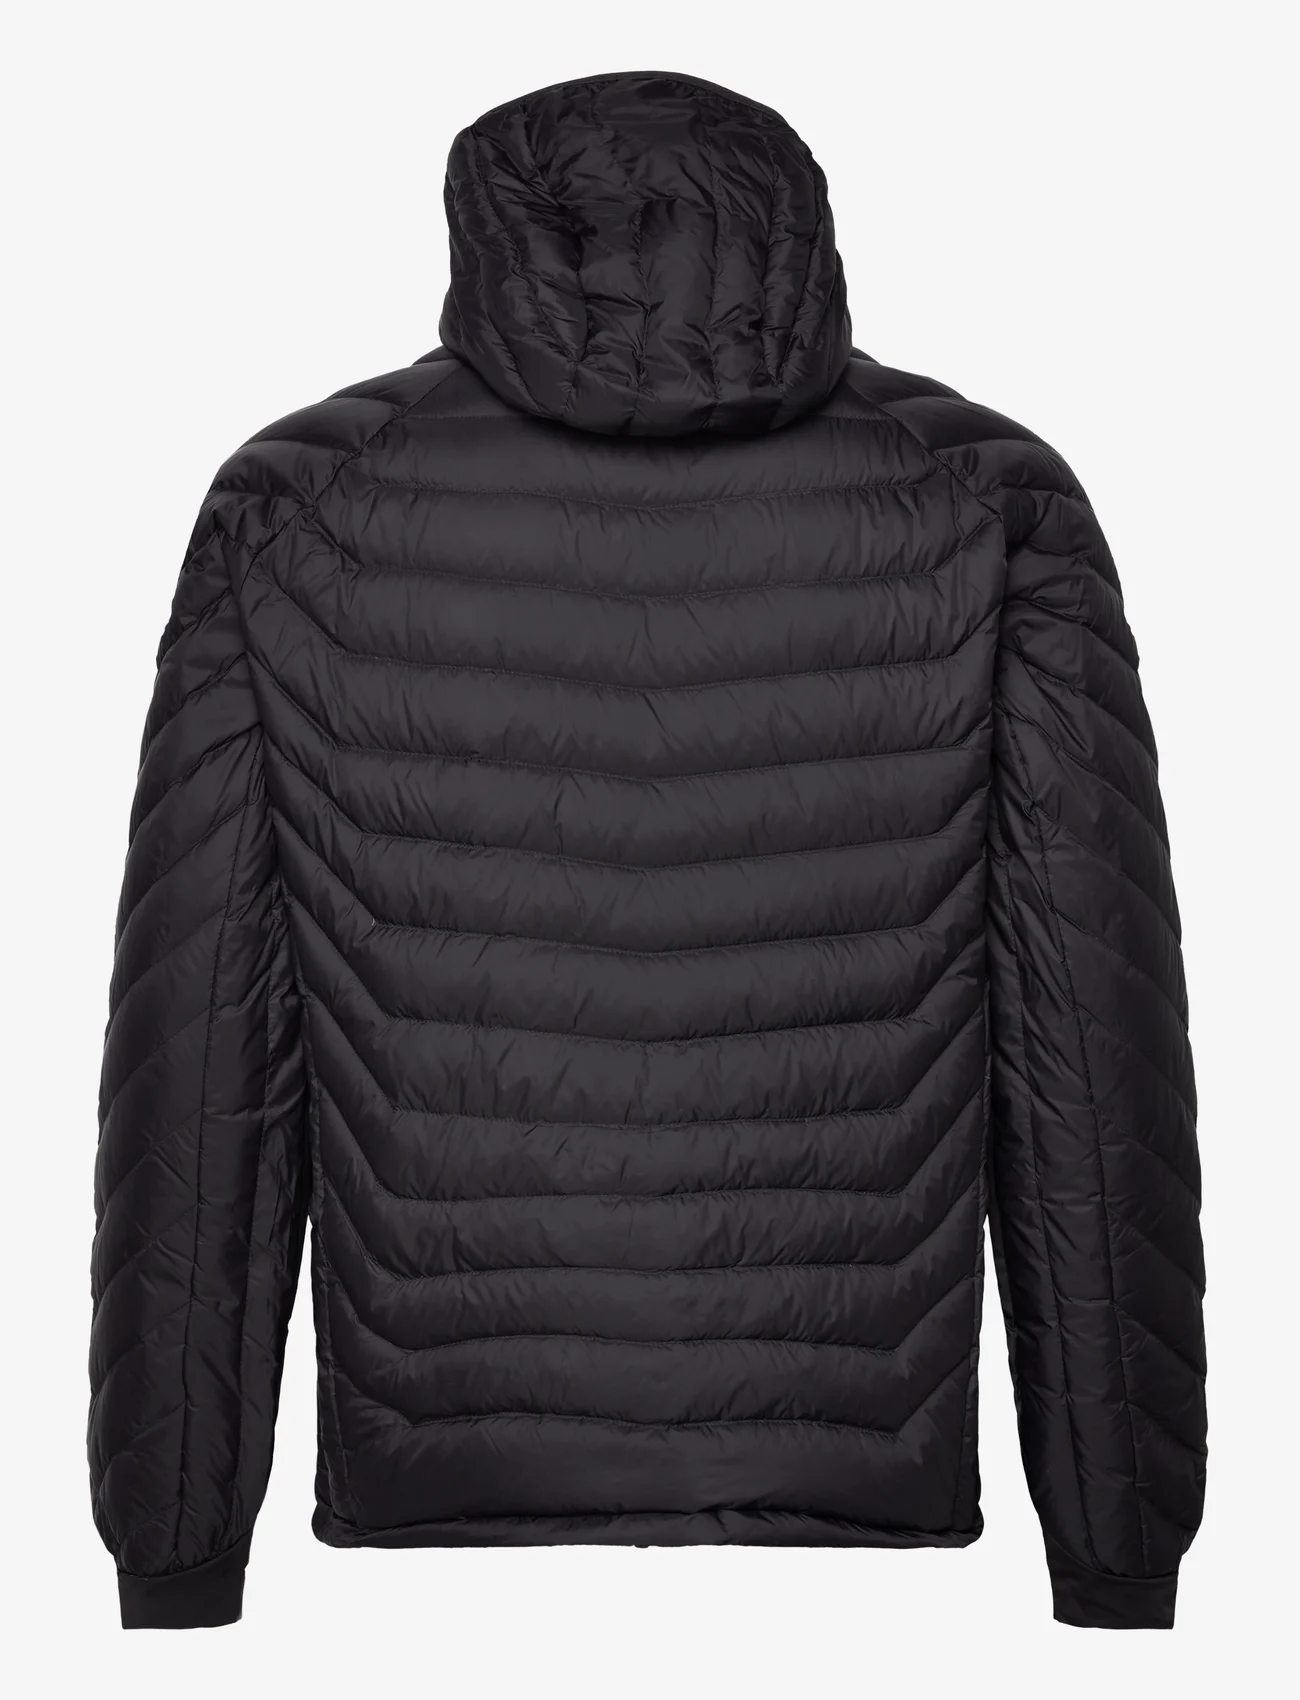 Skogstad - M Salen CO - padded jackets - black - 1